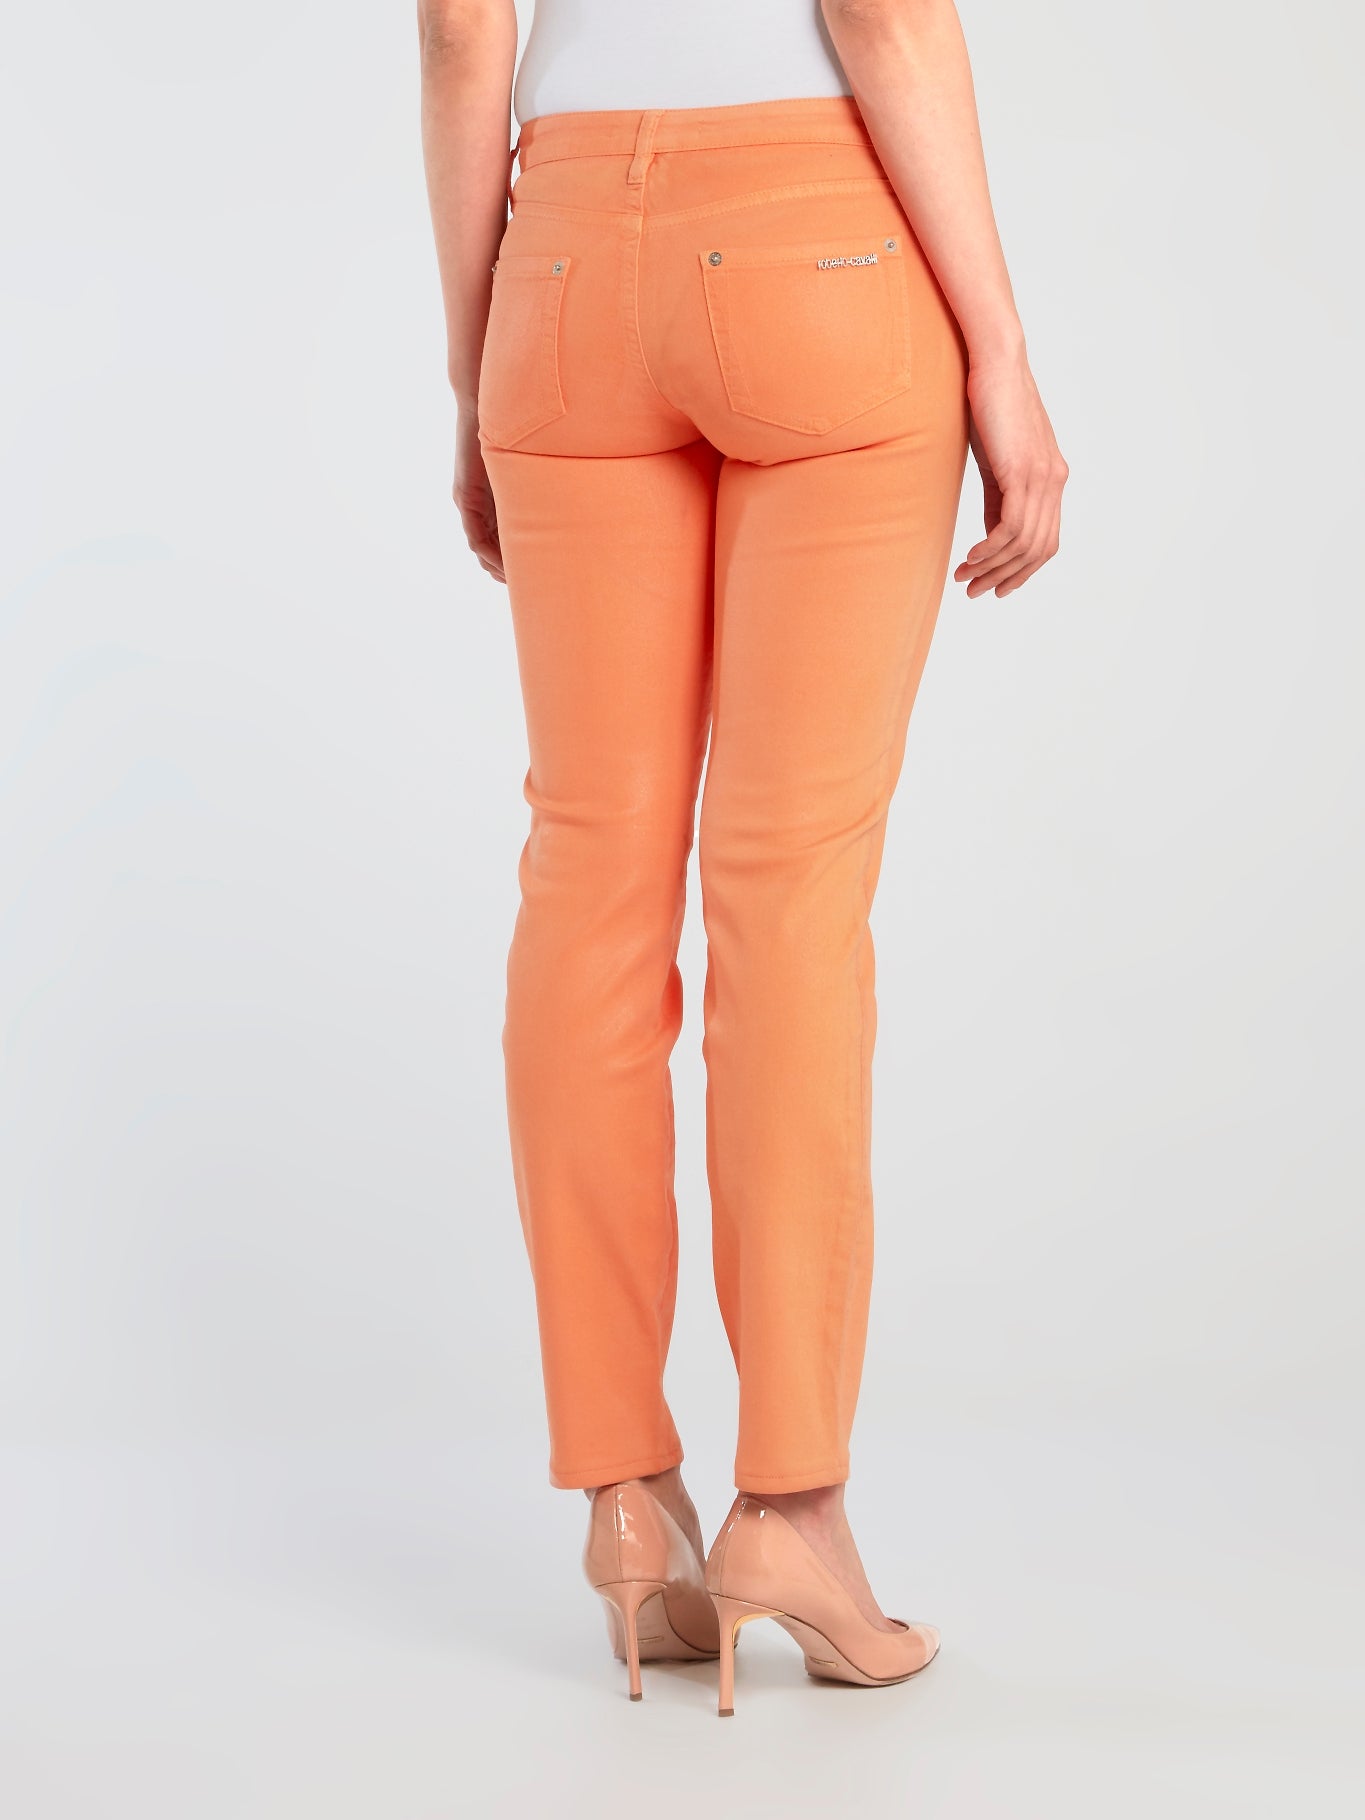 Orange Slim Fit Jeans